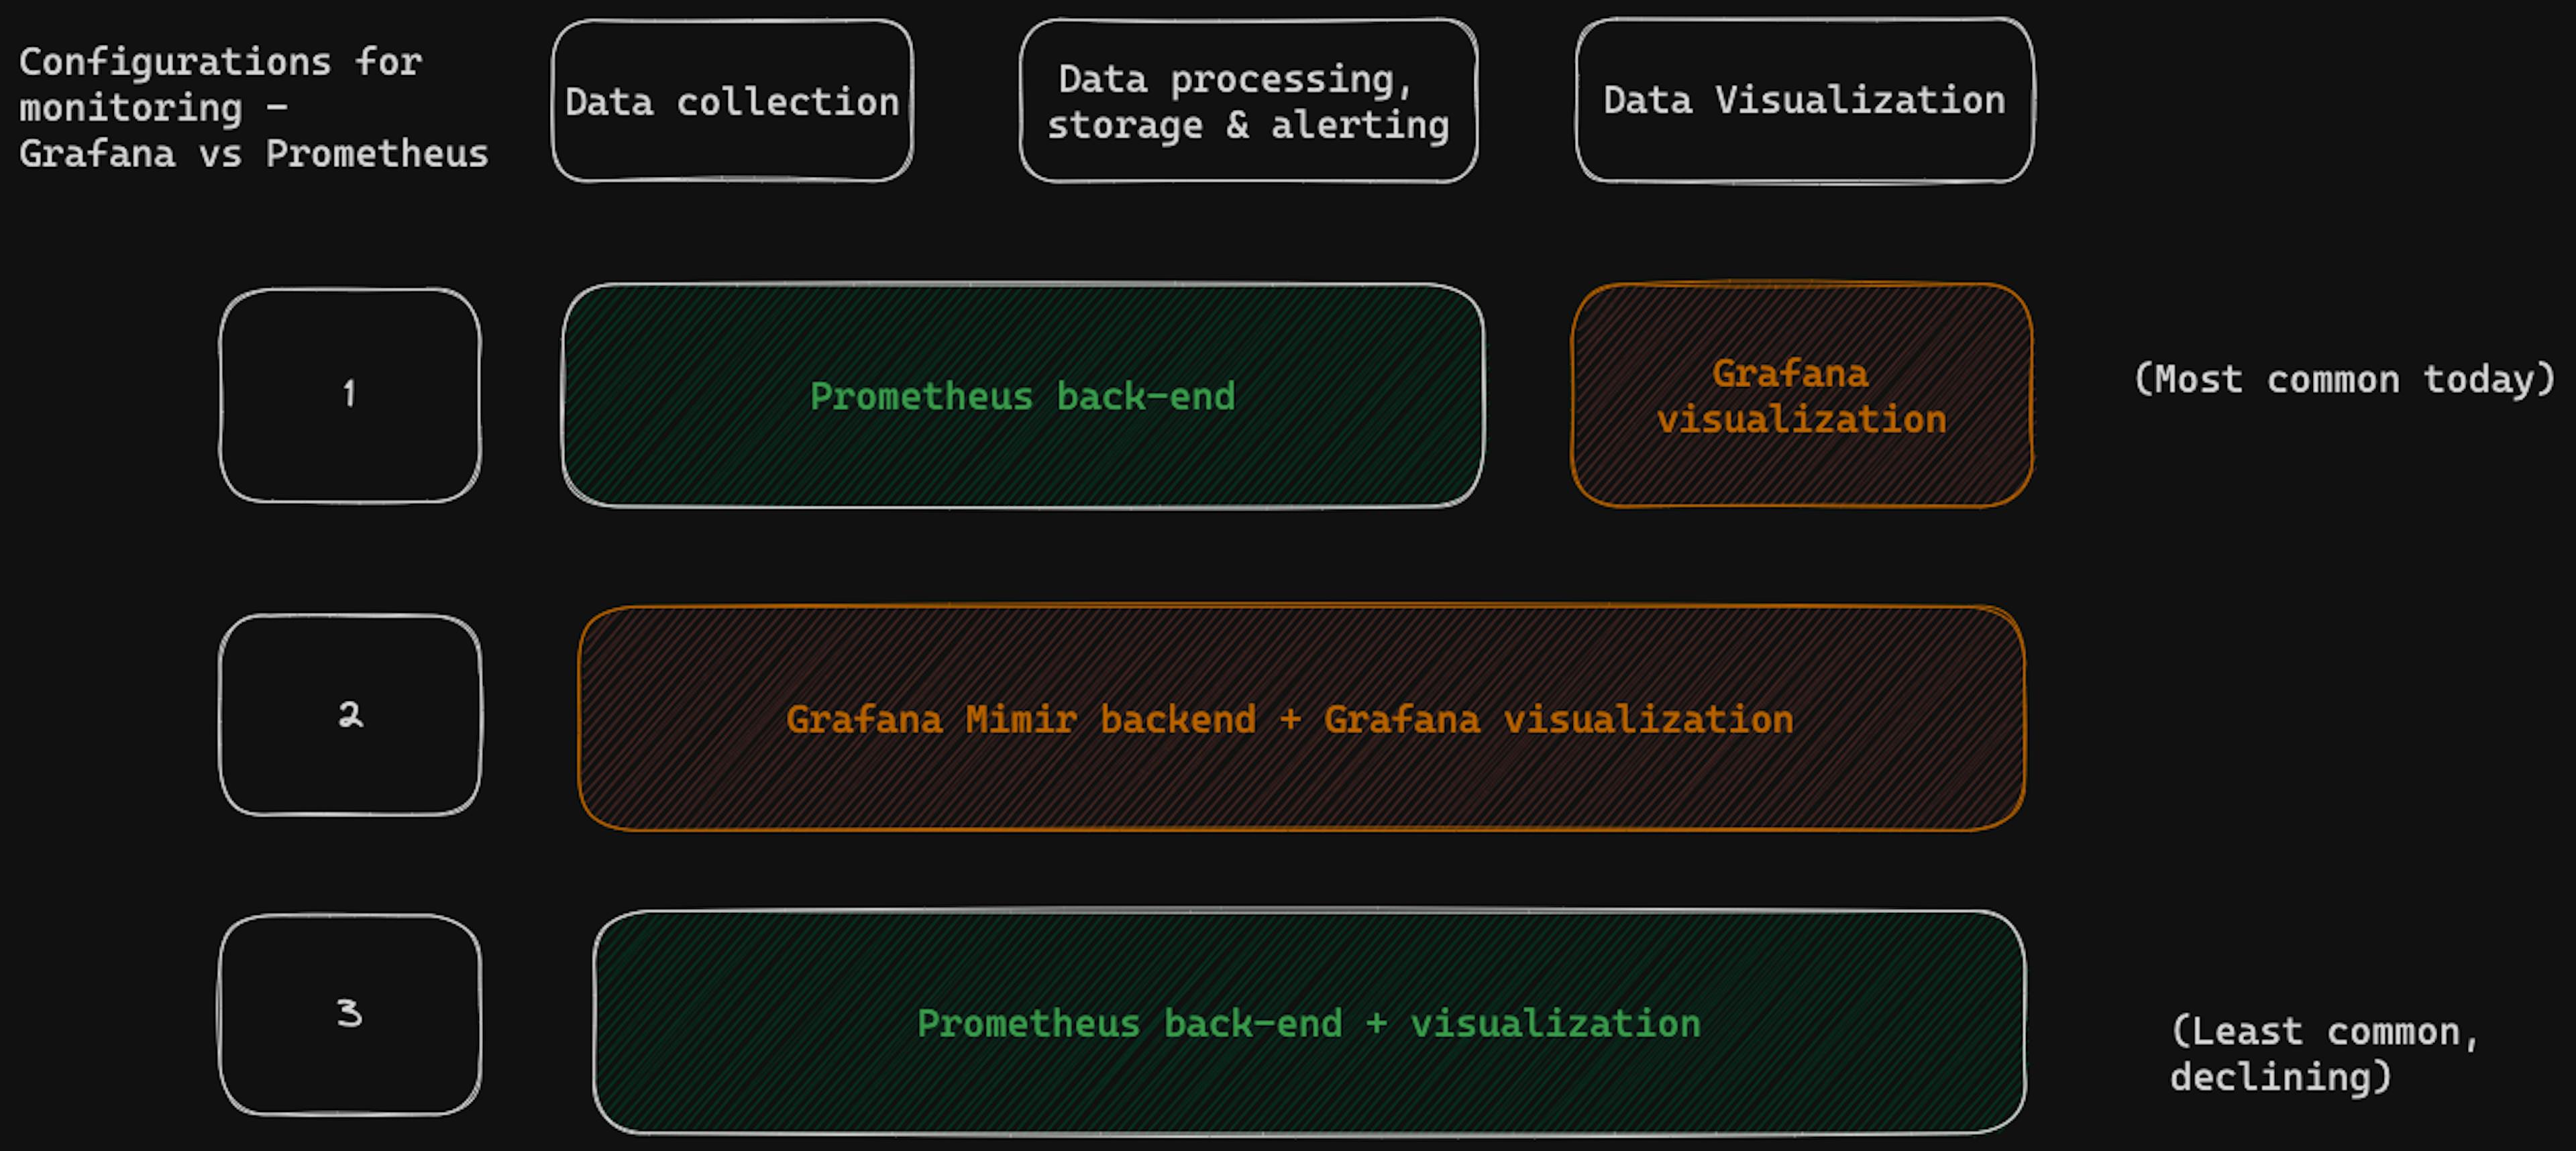 Prometheus and Grafana configurations for monitoring